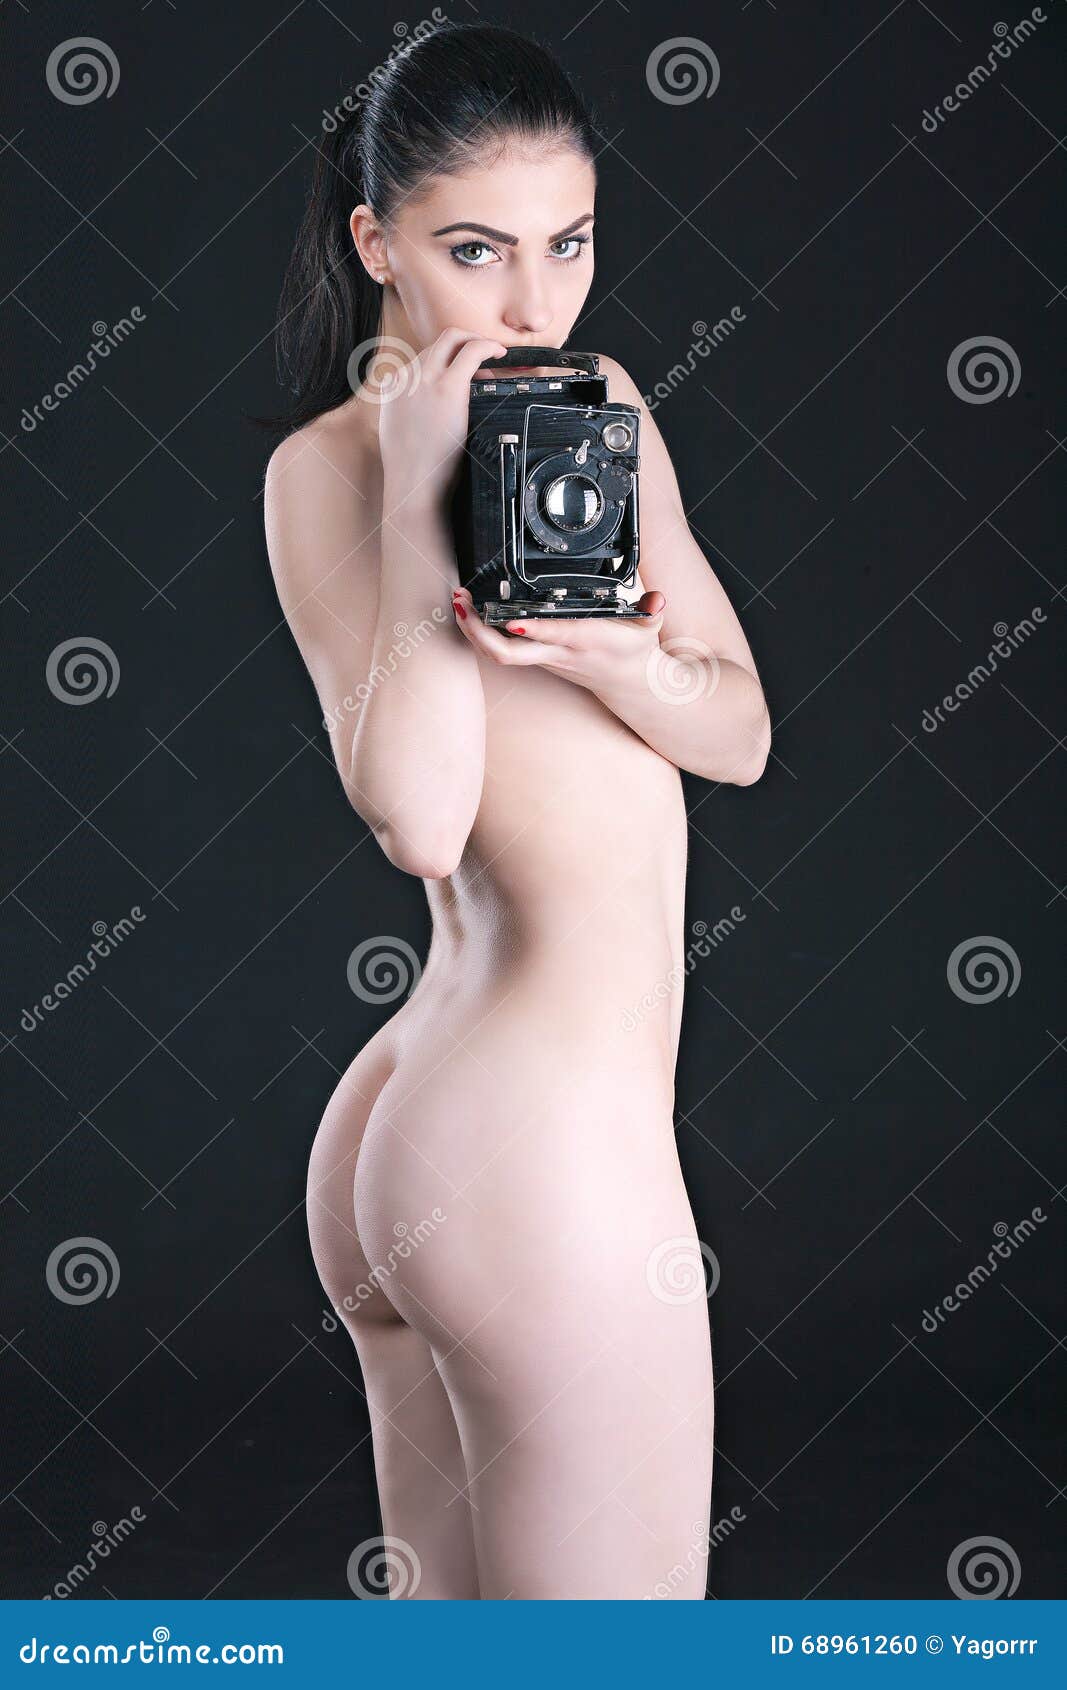 Nude Girls On Camera gallery nude